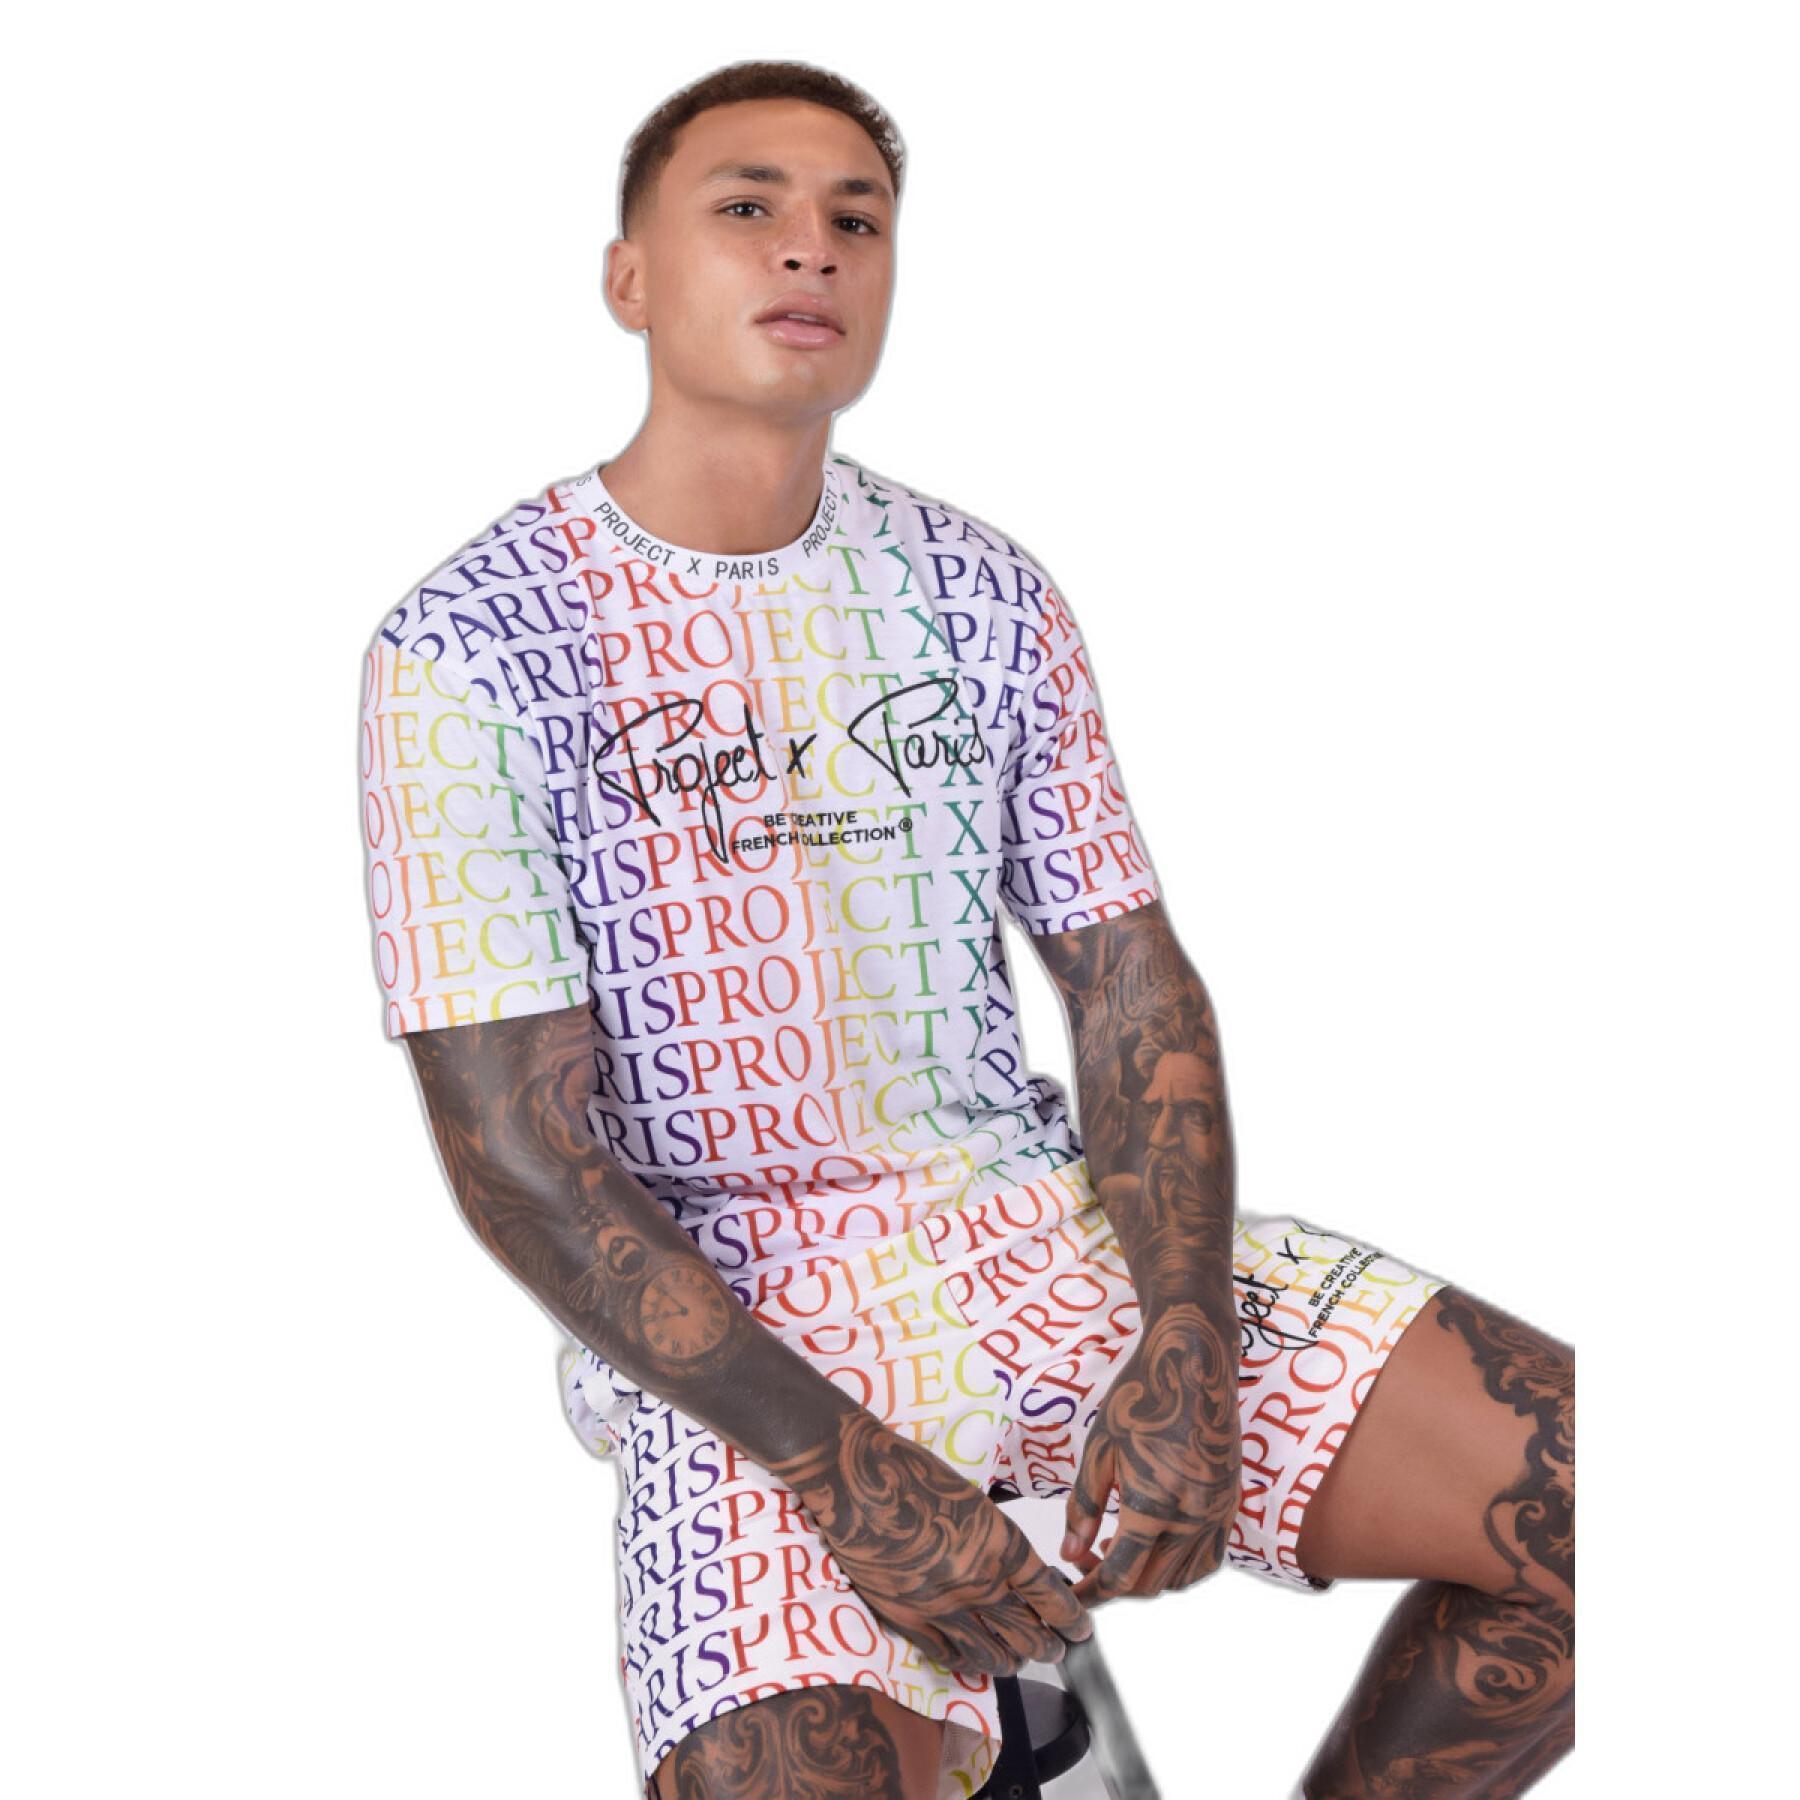 T-shirt with rainbow gradient logo Project X Paris